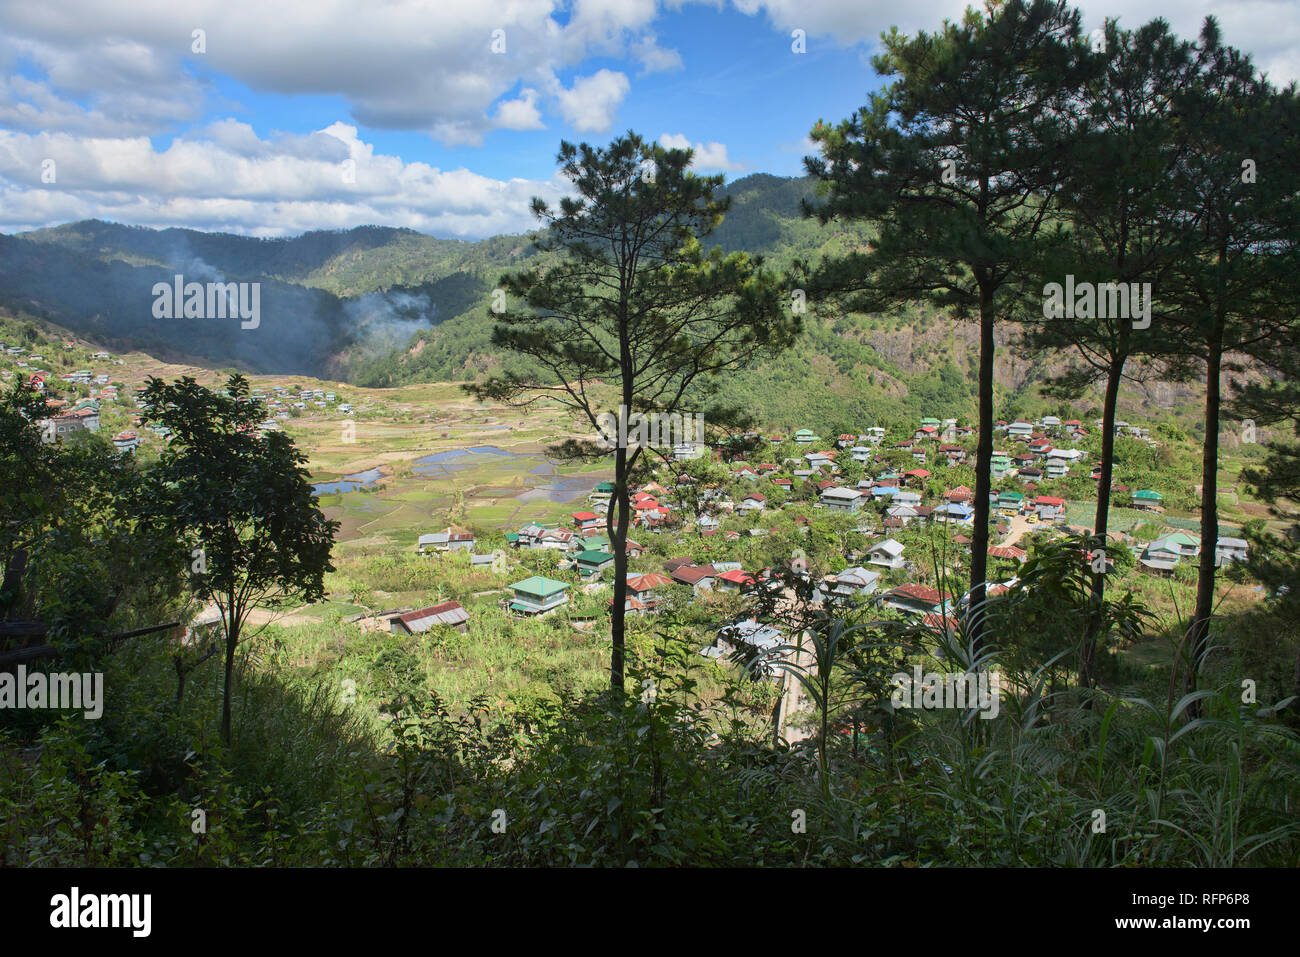 Picturesque Aguid village, Sagada, Mountain Province, Philippines Stock Photo